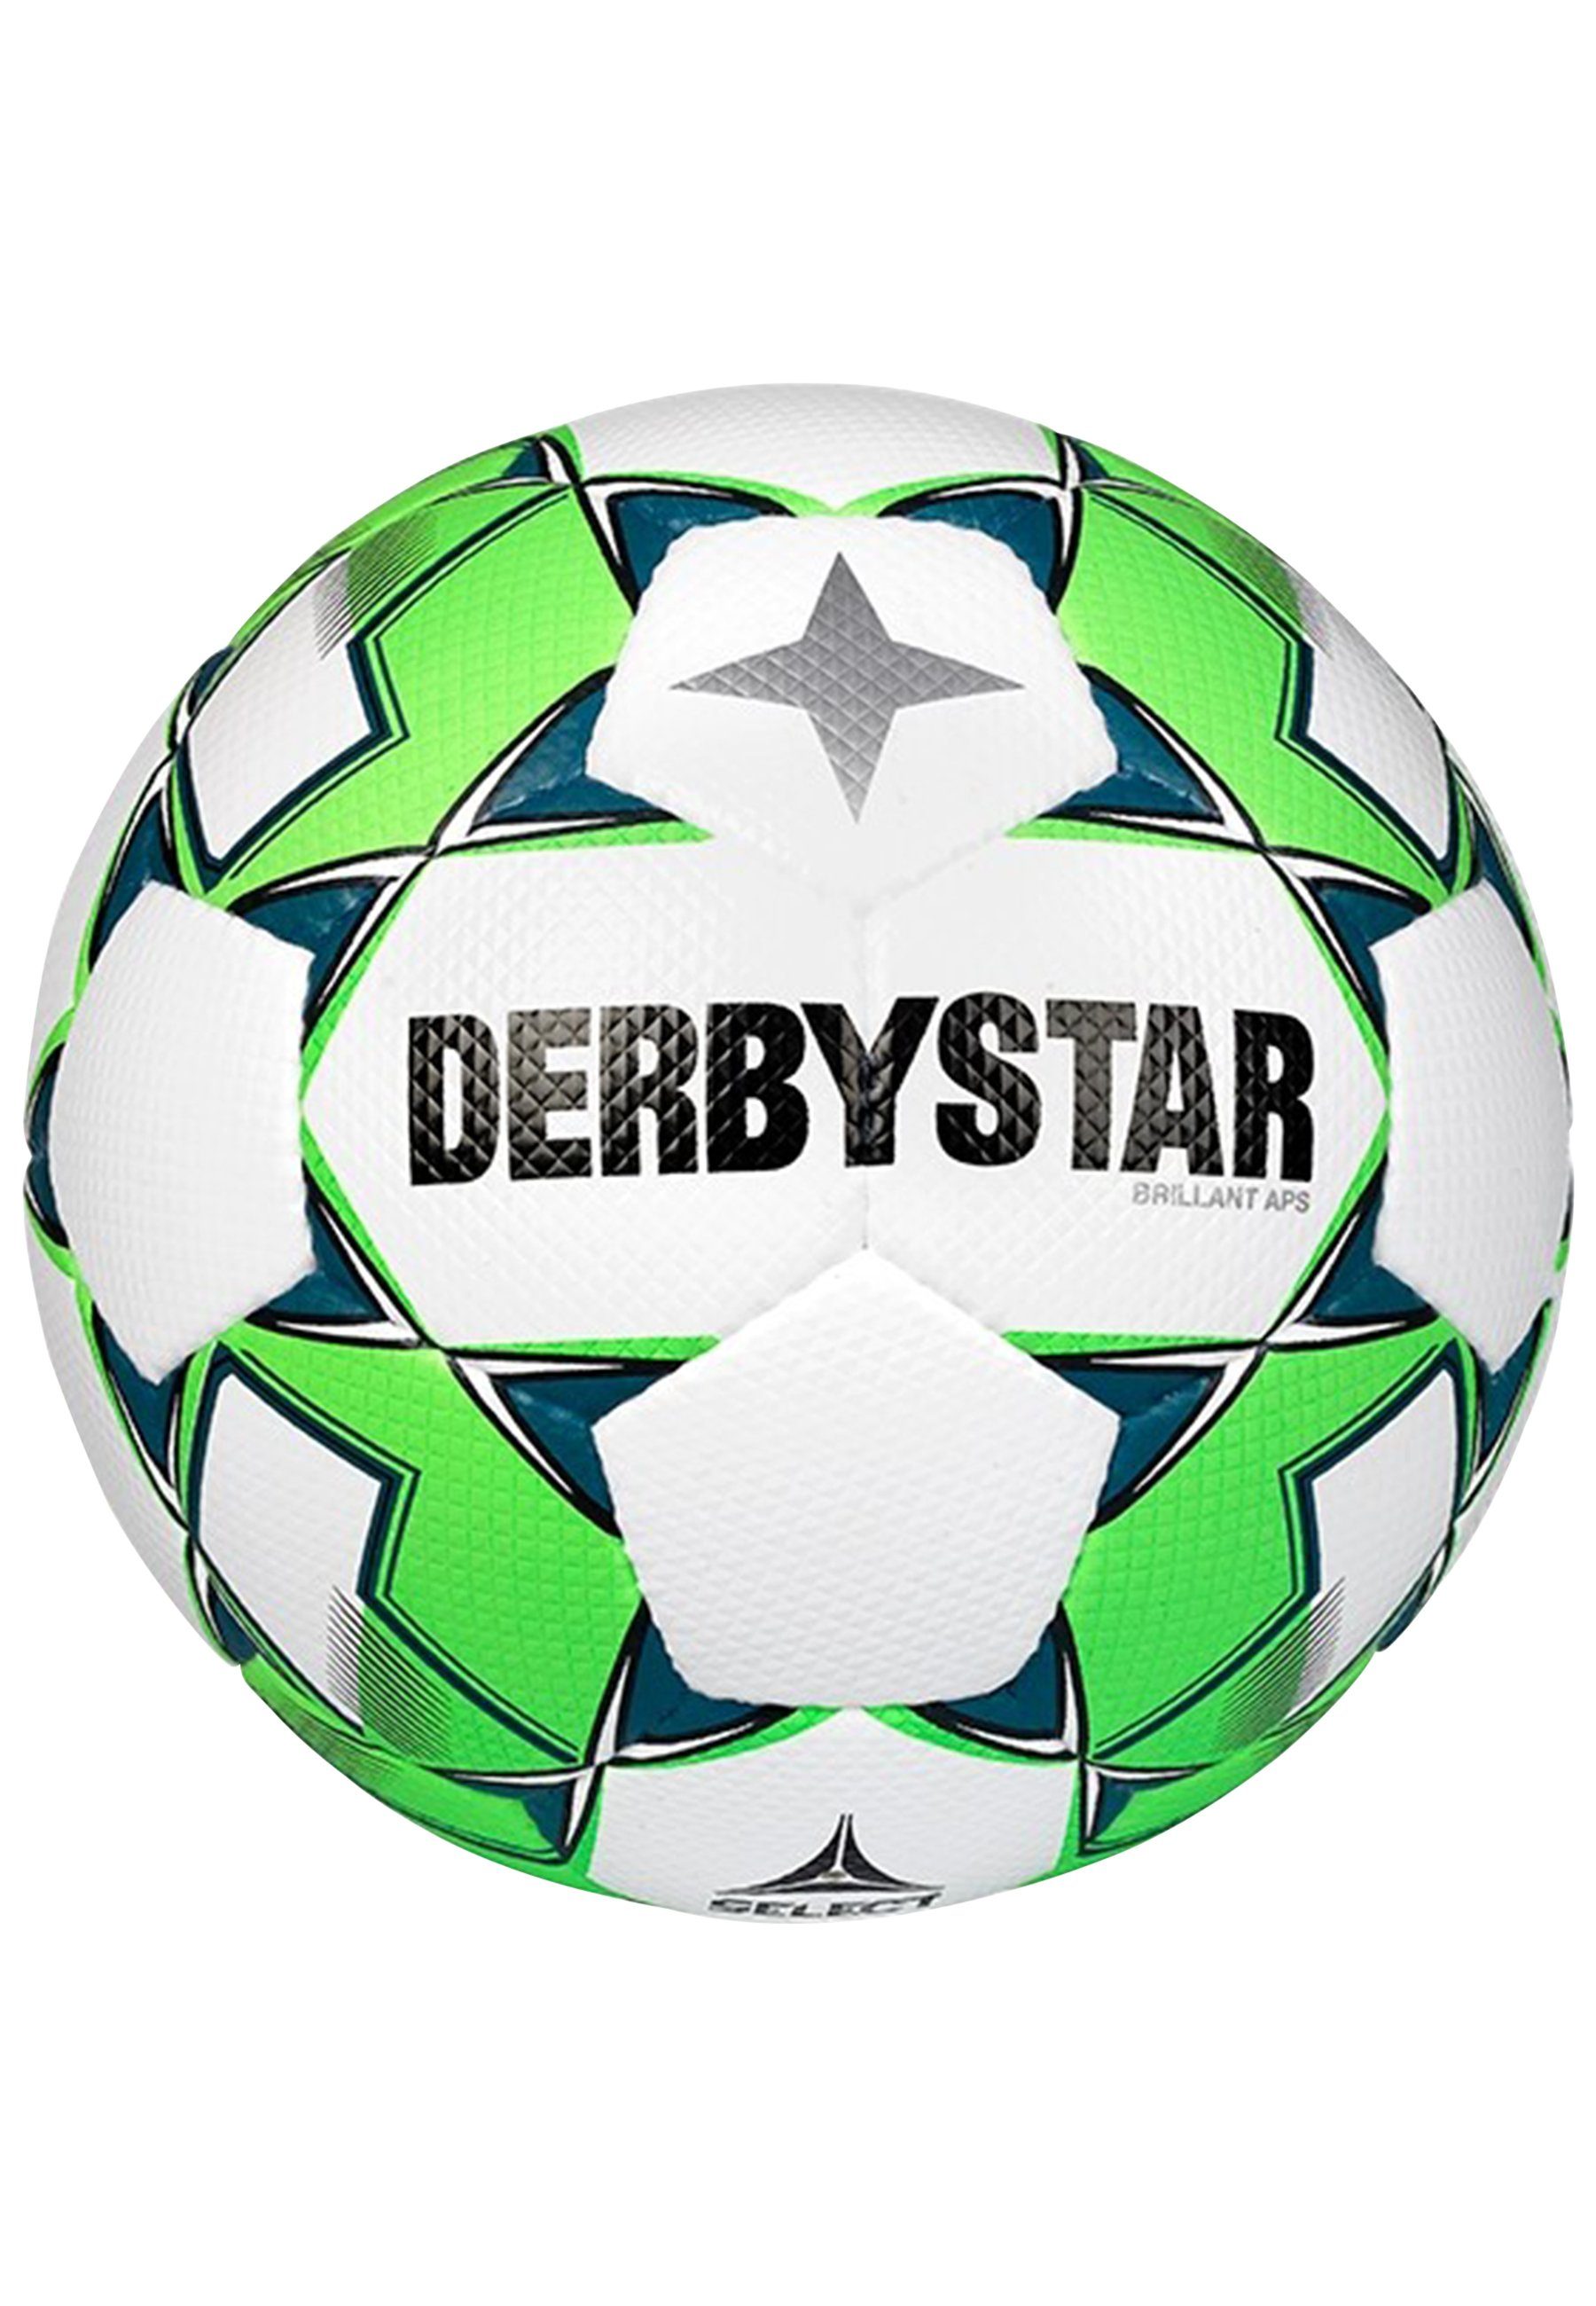 Derbystar APS Brillant Fußball